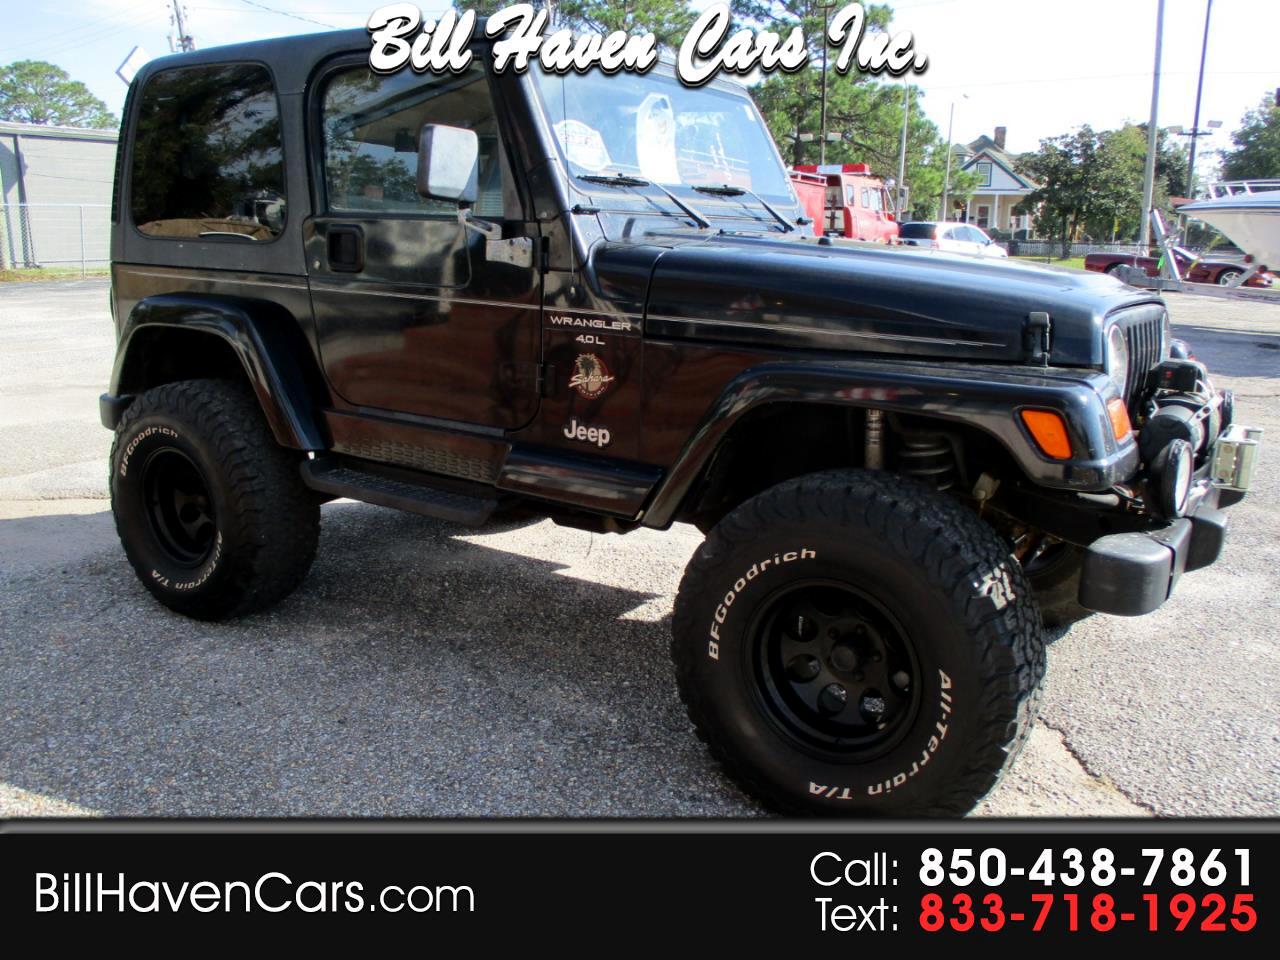 Used 1999 Jeep Wrangler Sold in Pensacola FL 32502 Bill Haven Cars Inc